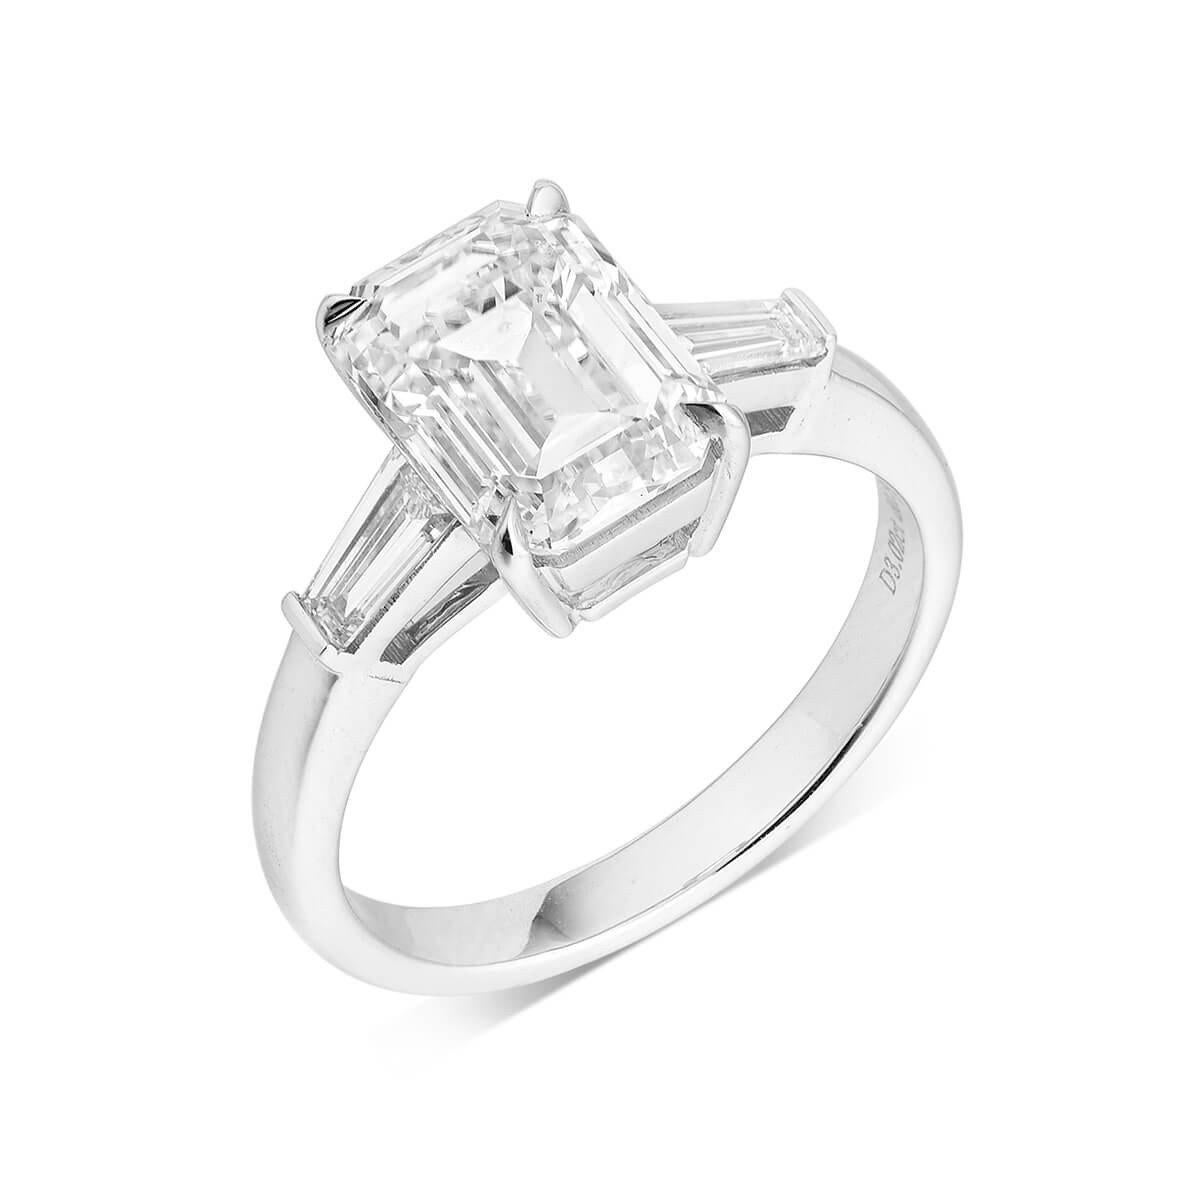 EMERALD CUT DIAMOND RING - 3.38 CT


Set in 18Kt white gold


Total emerald cut diamond weight: 3.02 ct
[ 1 diamond ]
Color: E
Clarity: VVS1

Total side diamond weight: 0.36 ct
[ 2 diamonds ]
Color: E
Clarity: VS

GIA Certified